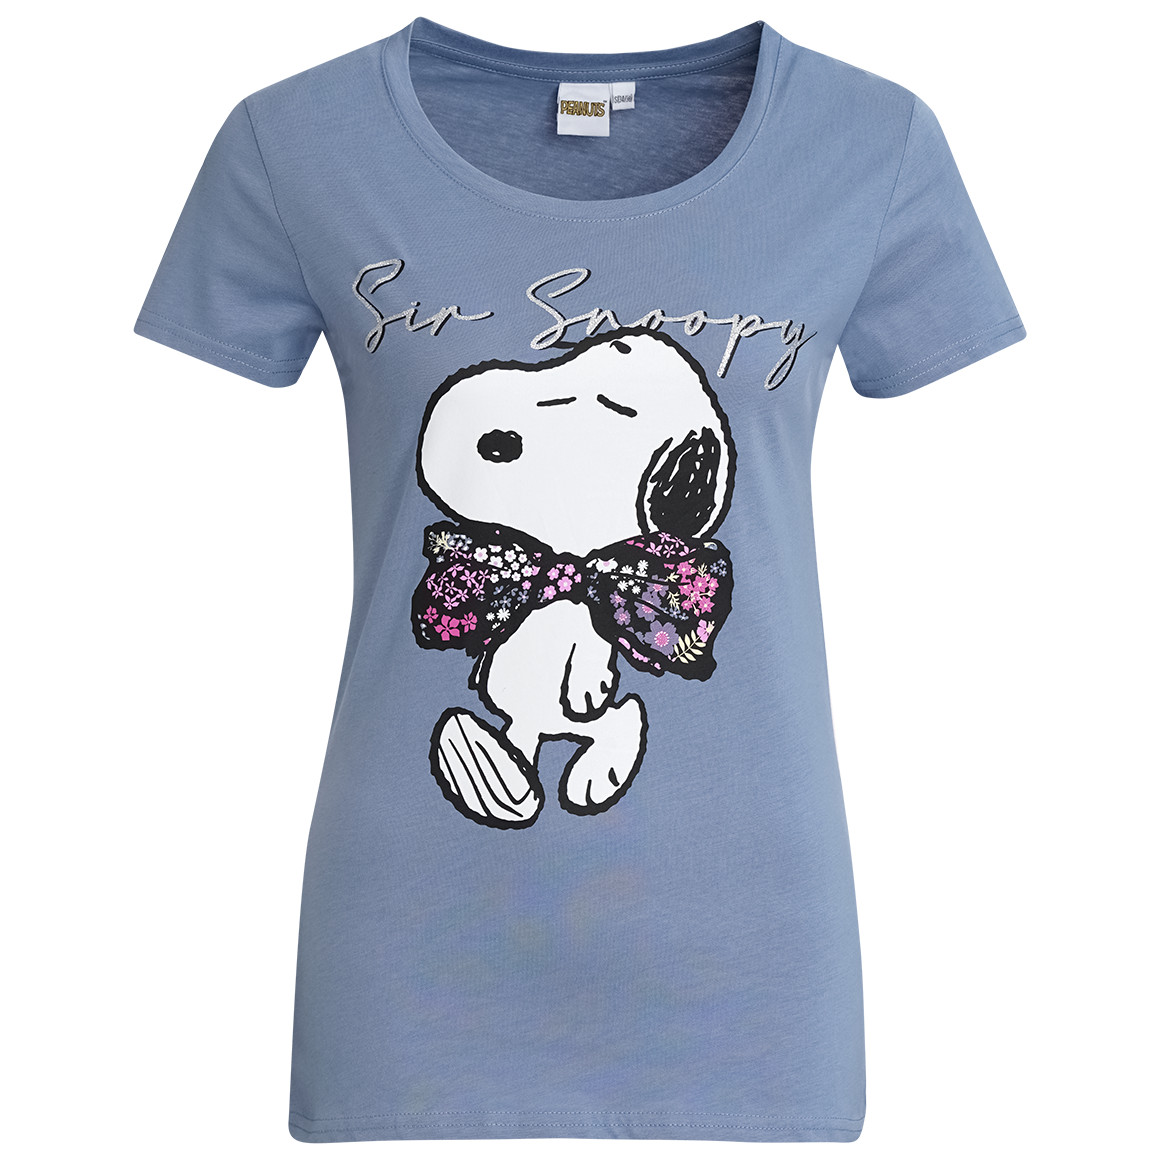 Peanuts T-Shirt mit Snoopy-Print | Ernsting's family